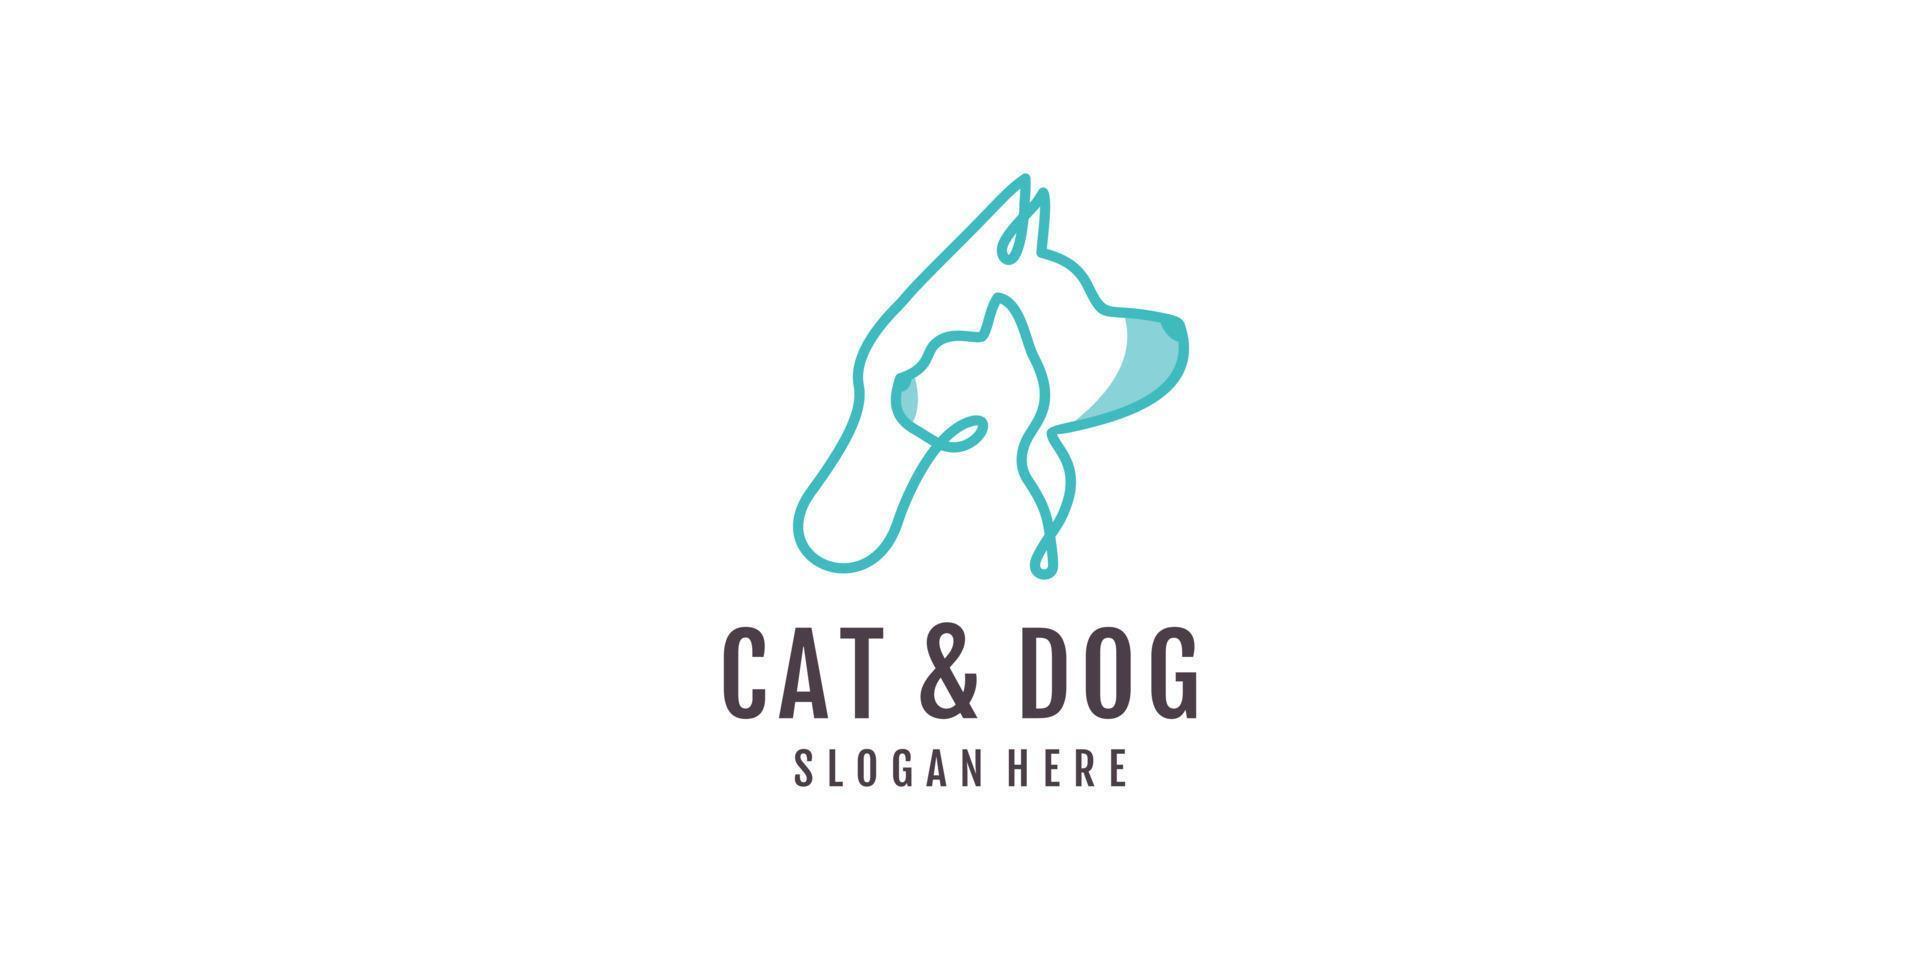 Cat and dog icon logo design with creative unique style Premium Vector